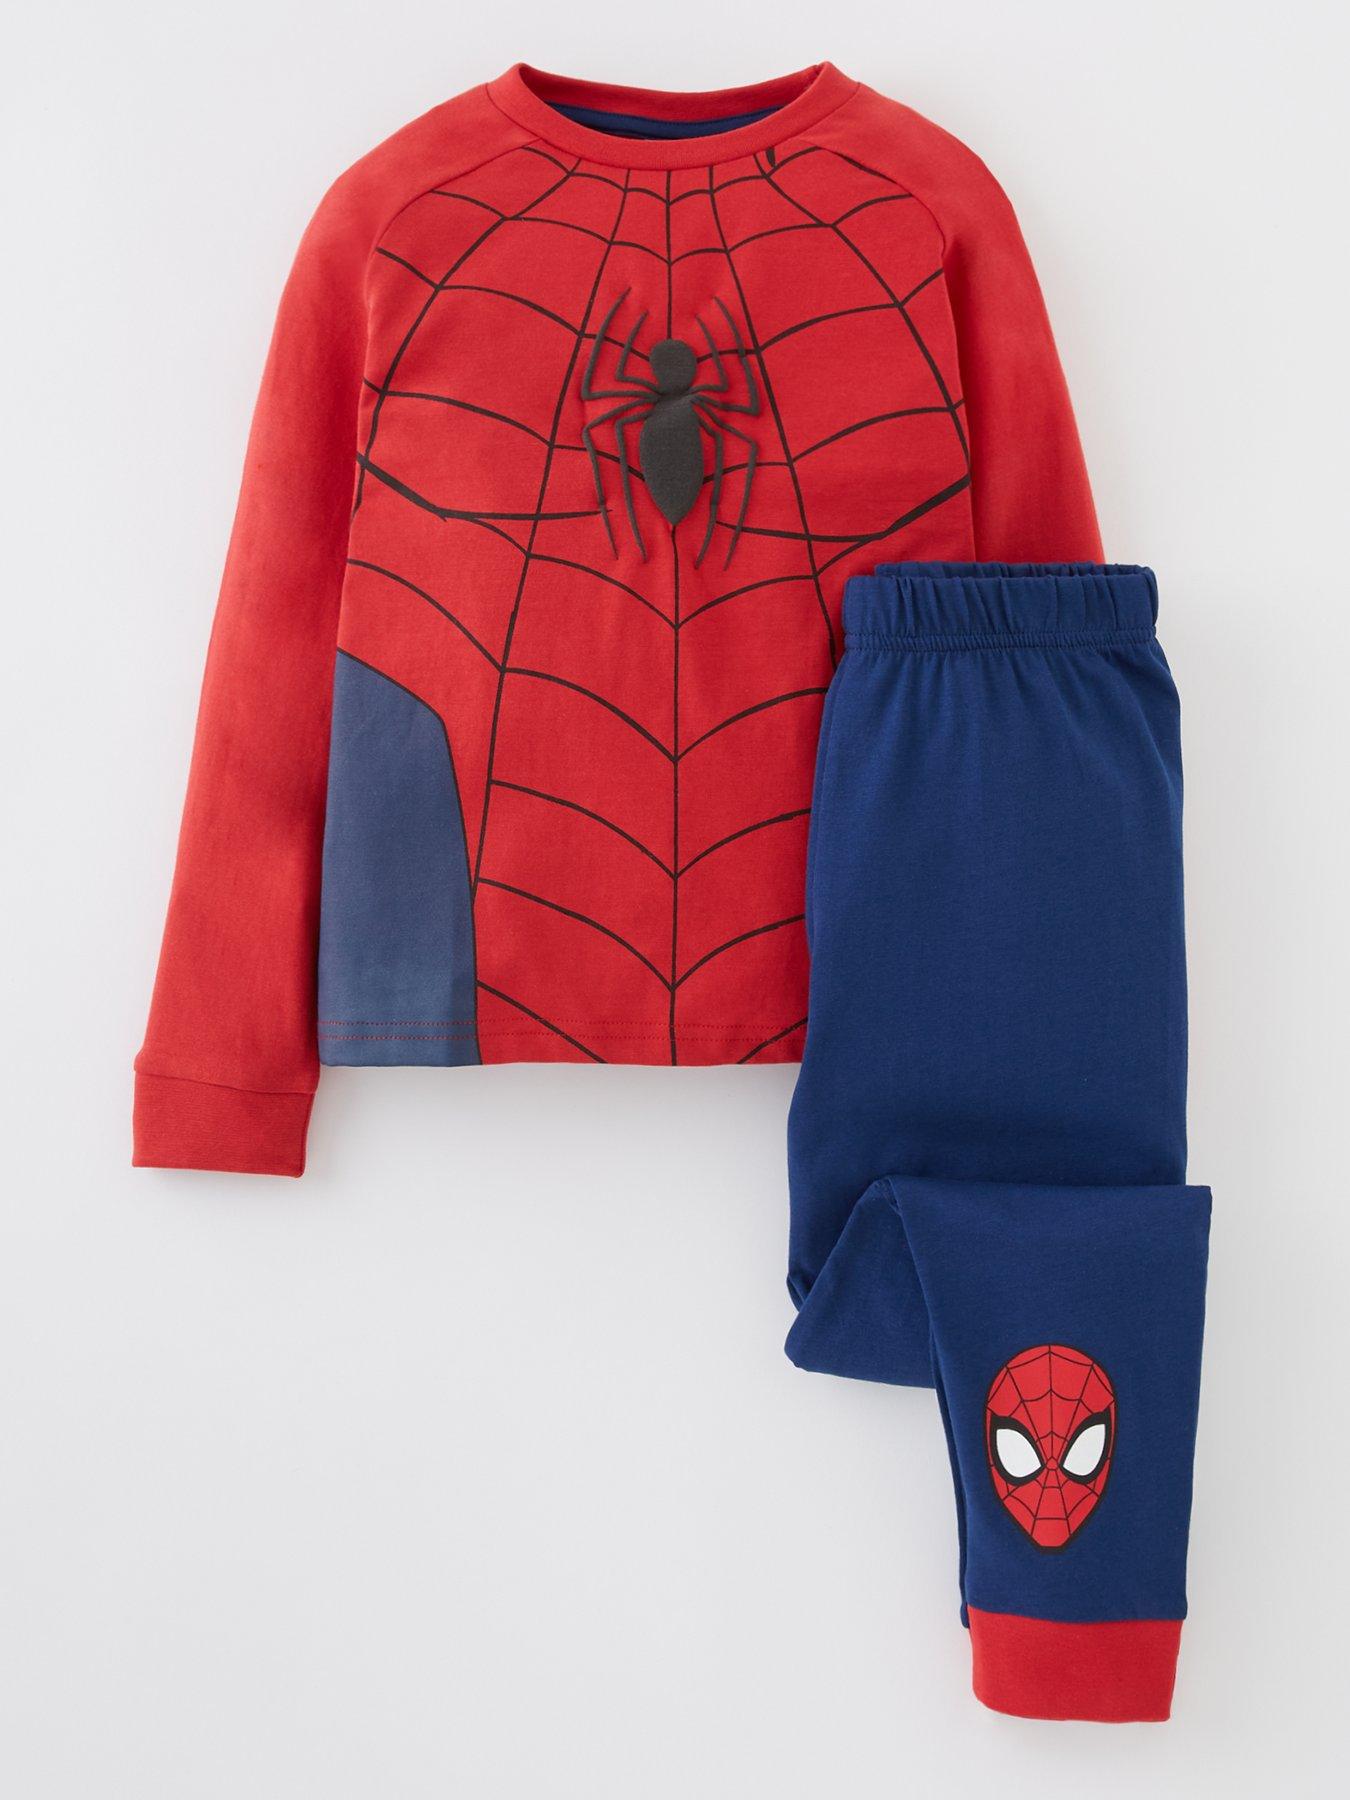 Spiderman Original Marvel Character Boys Short Sleeve 100% Cotton Pyjamas Set Glow in The Dark 2-8 Years 